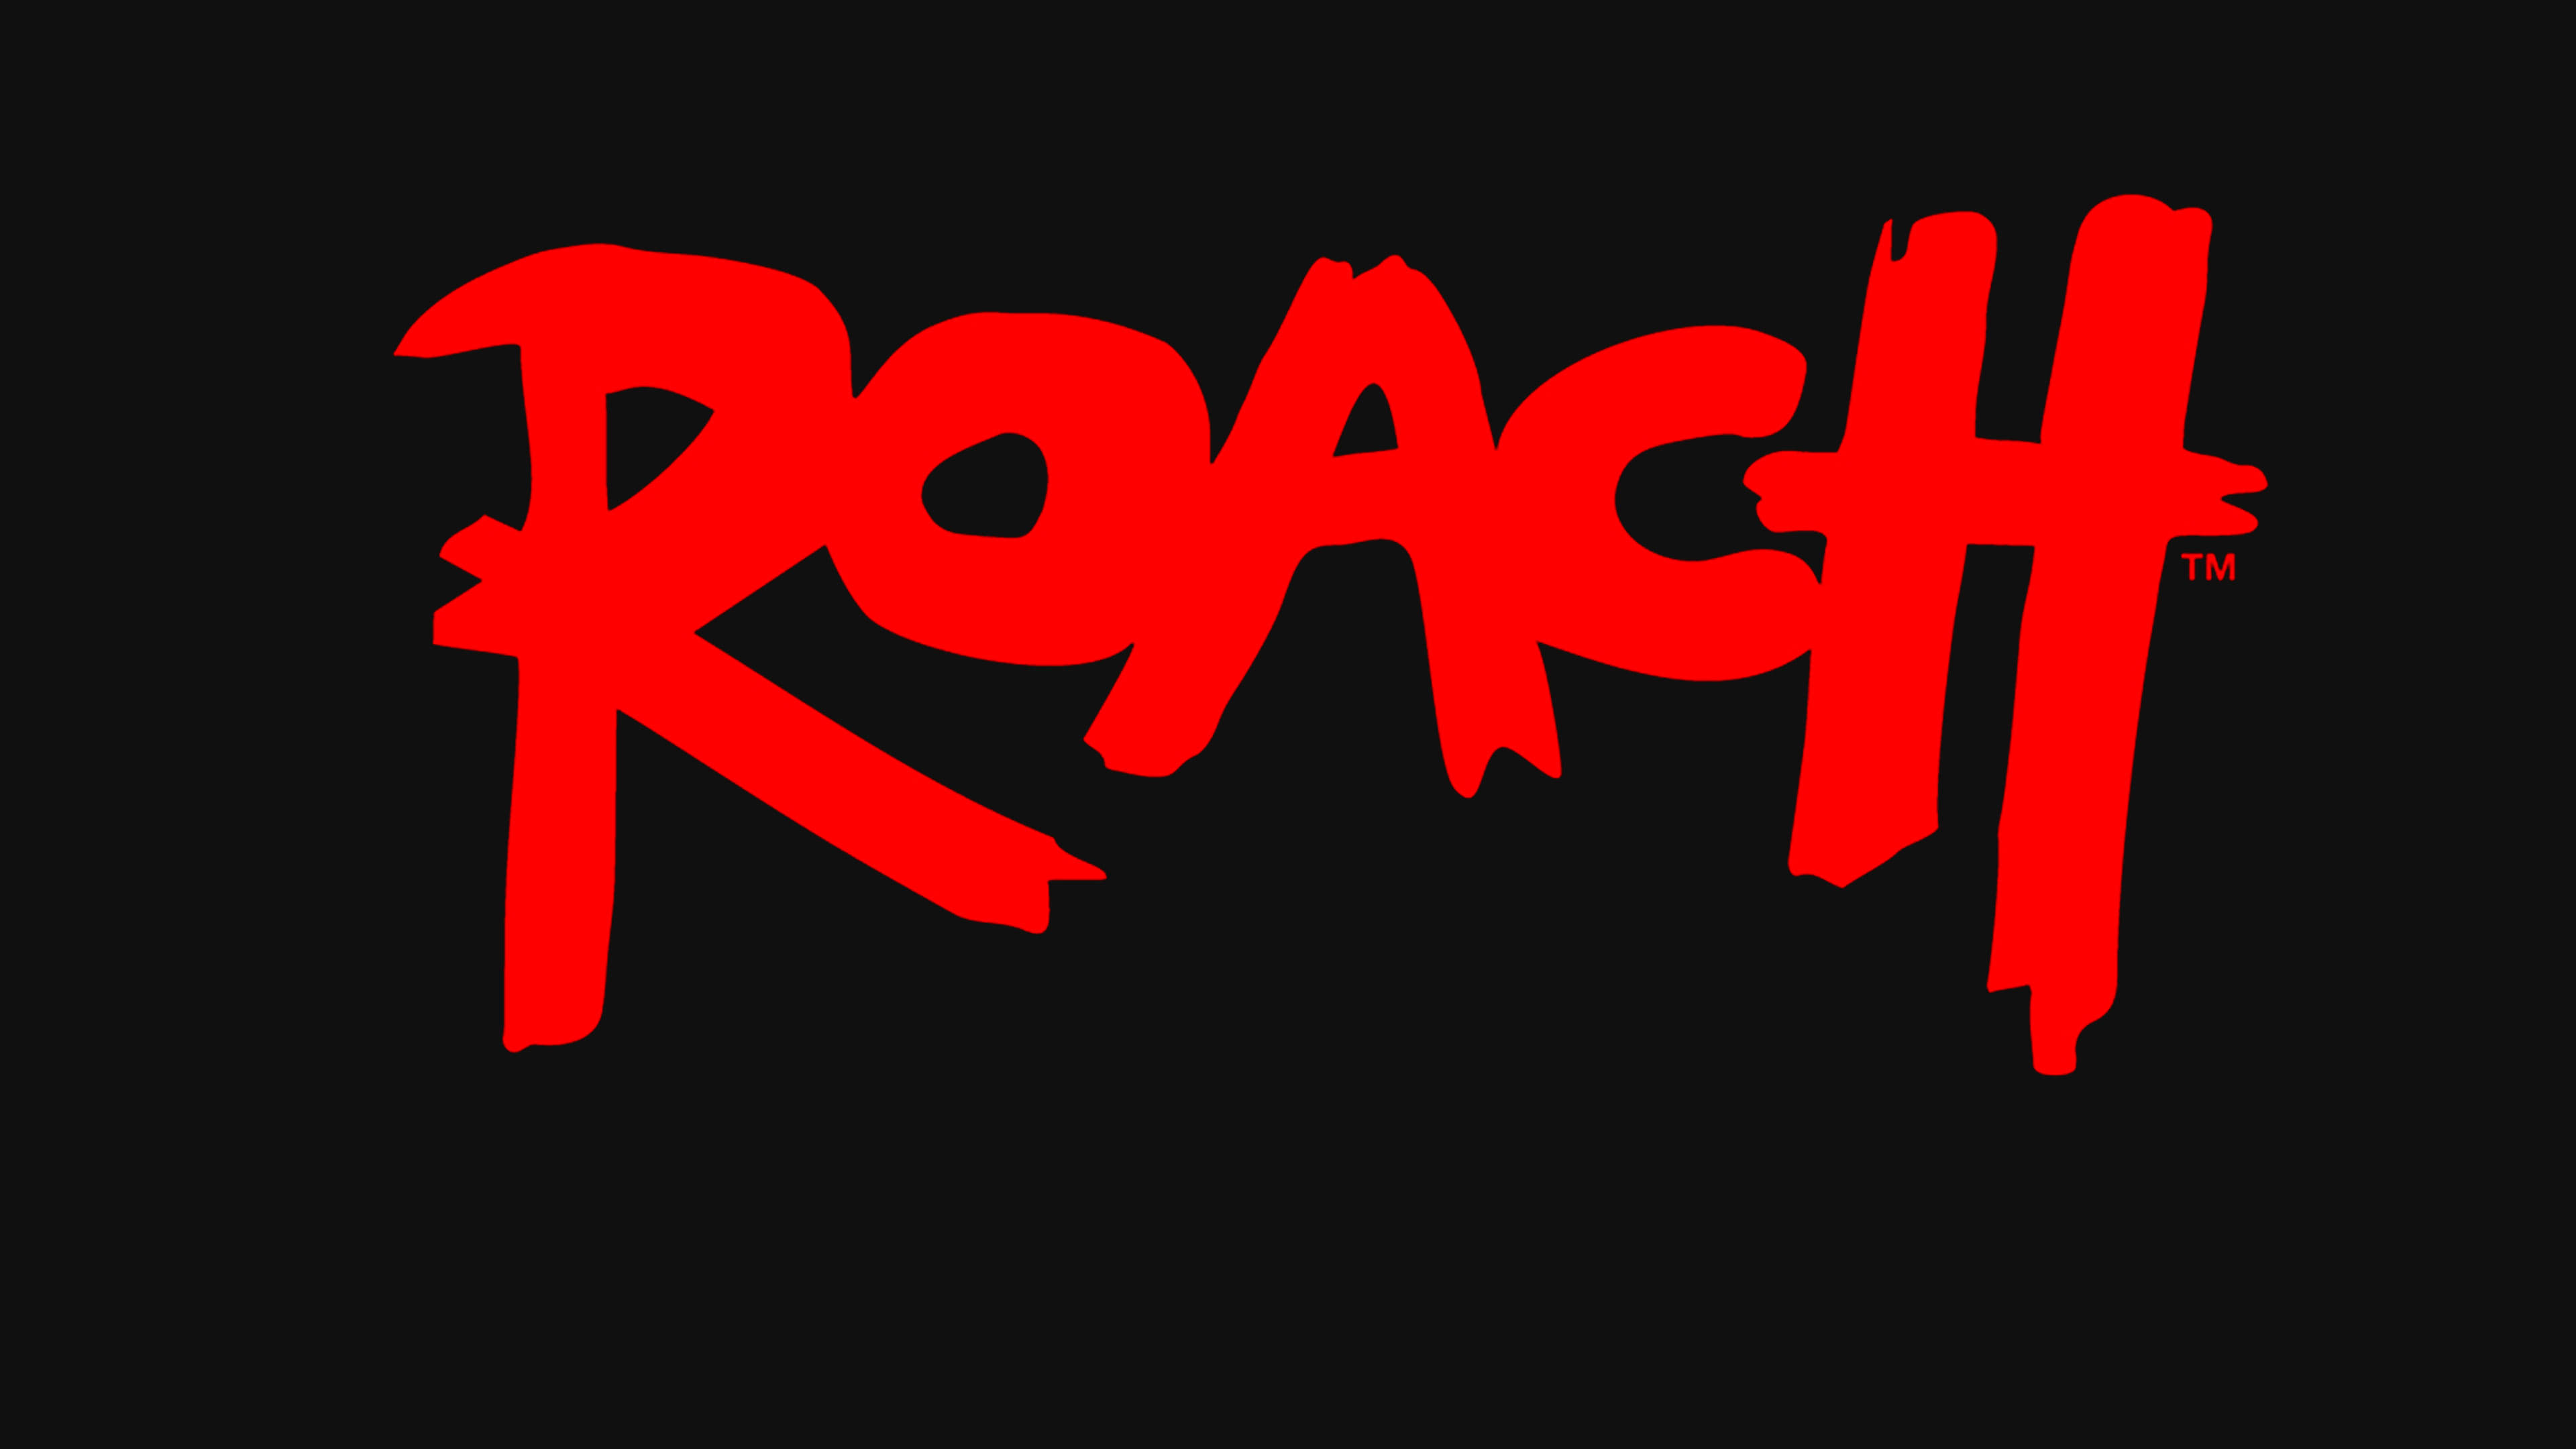 ROACH™ (2022)